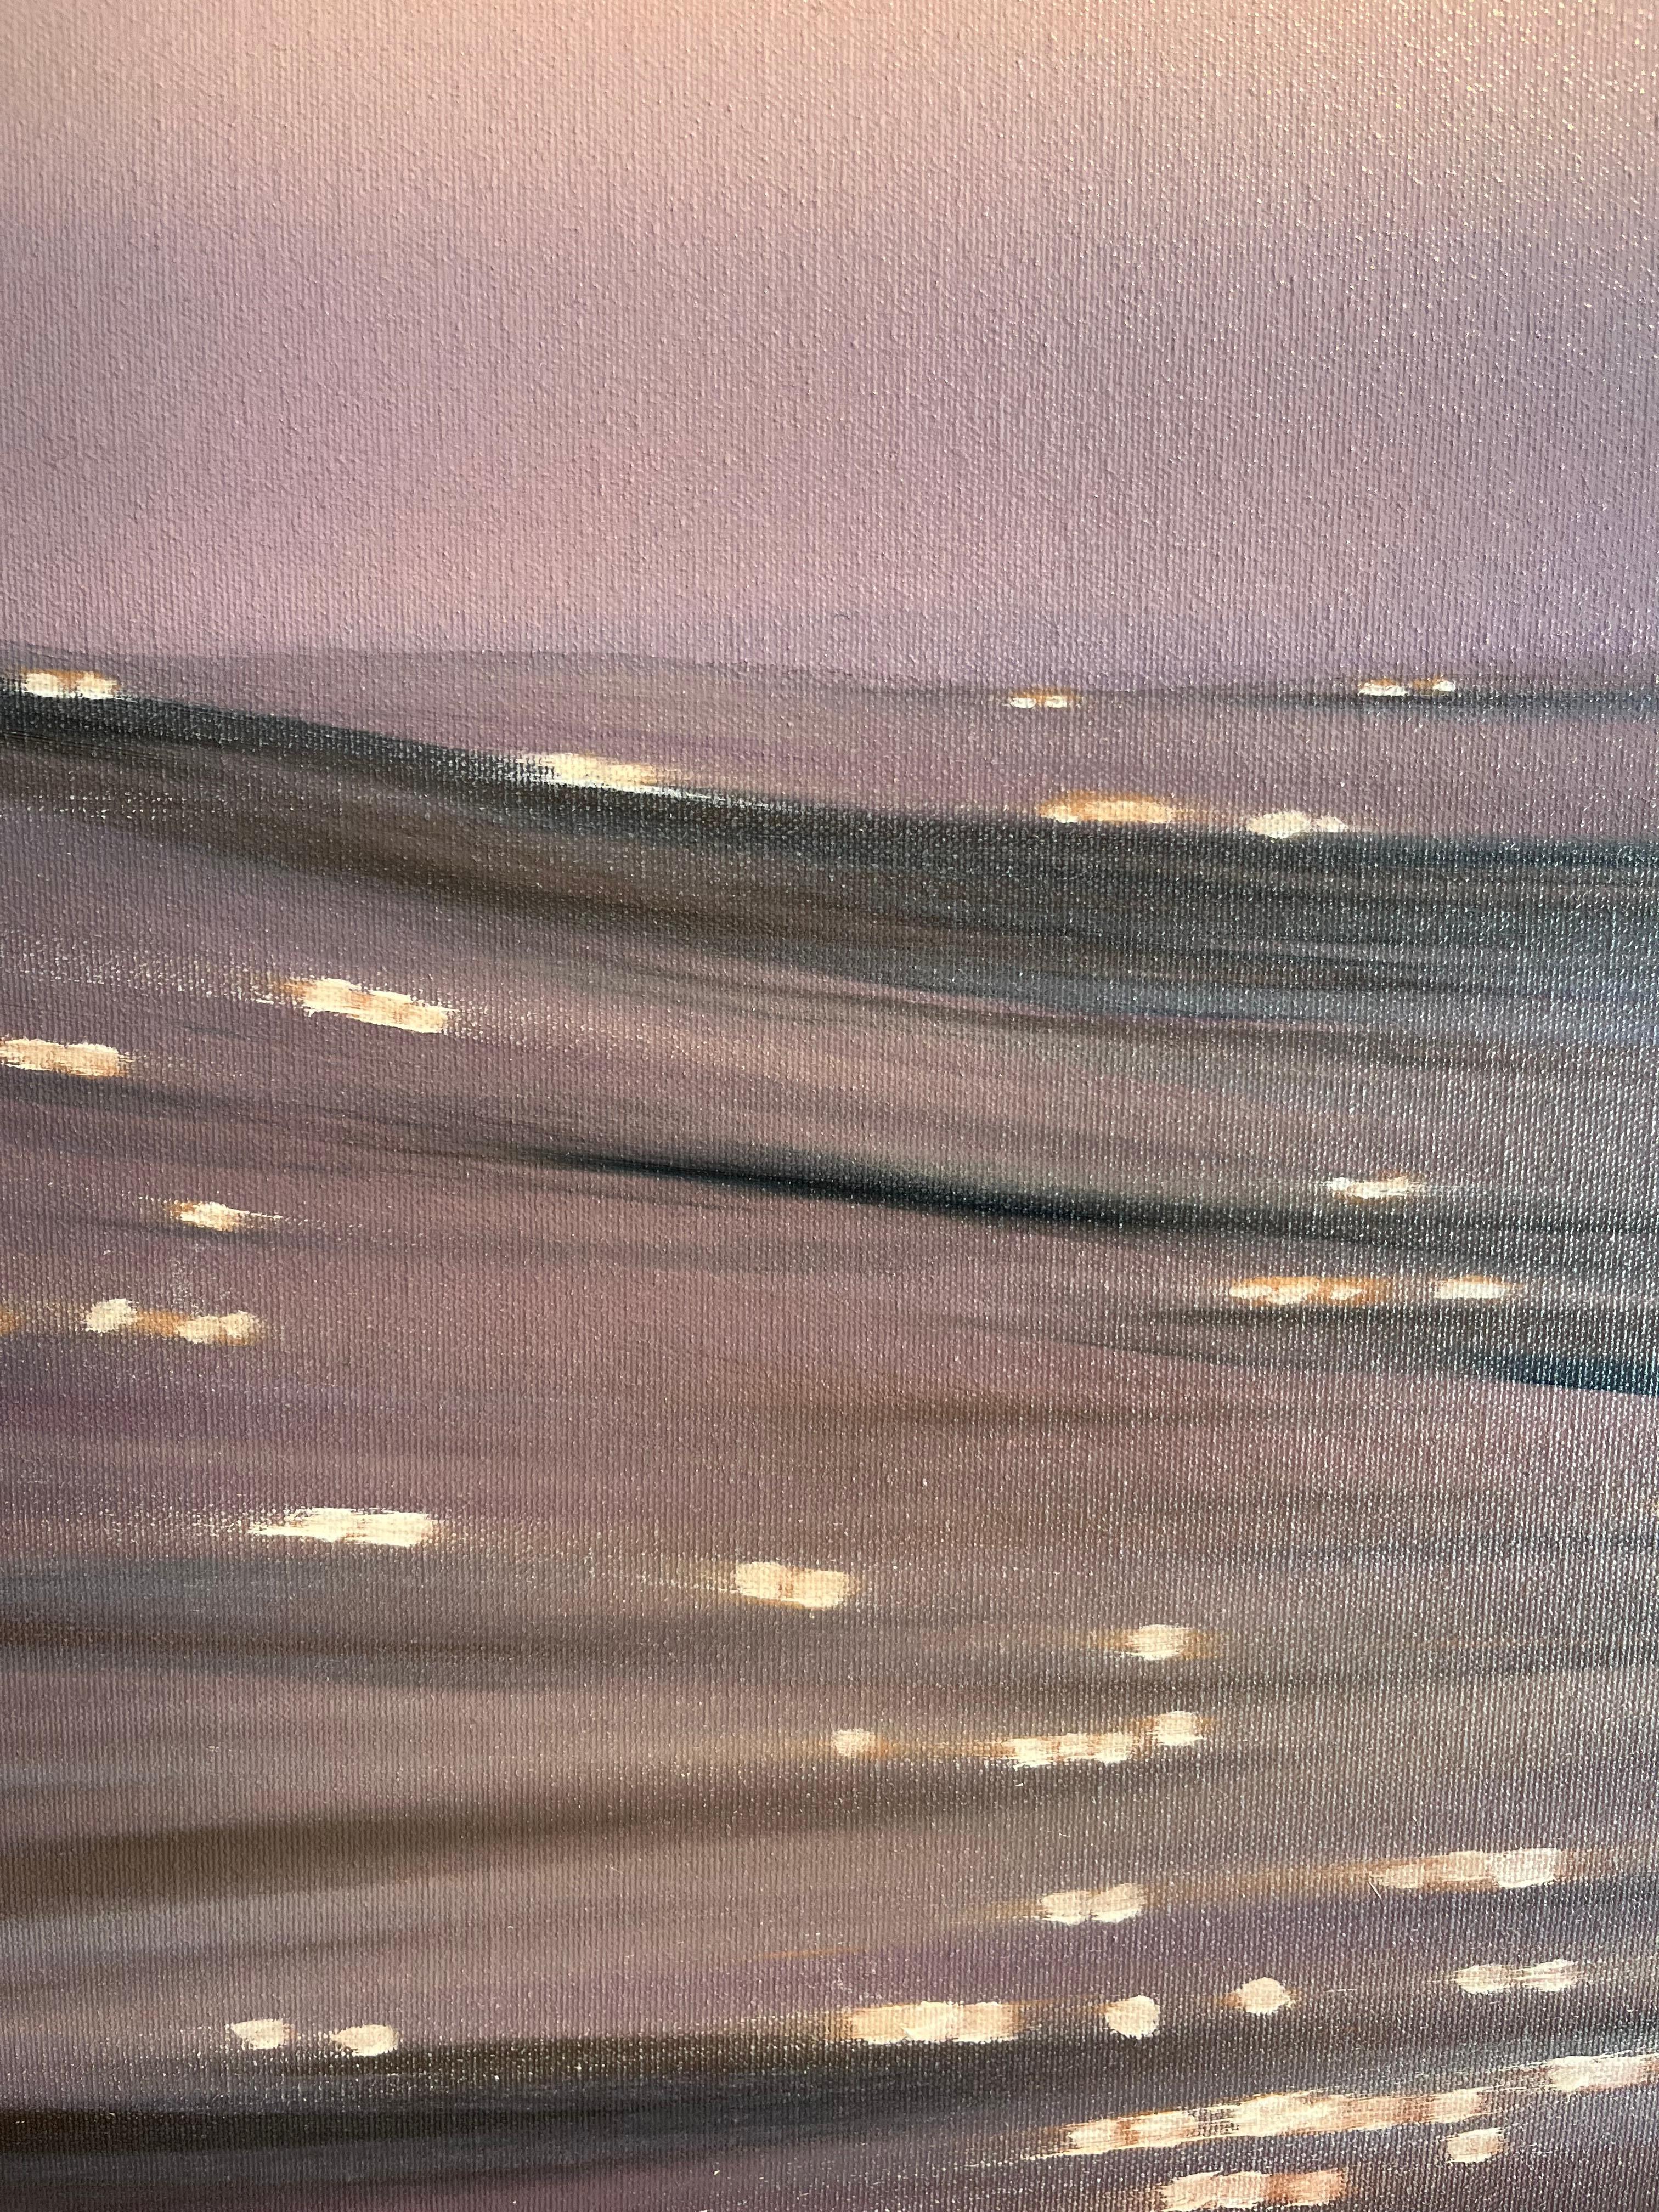 Silken Sunset-original realism sunset seascape oil painting-contemporary art For Sale 1